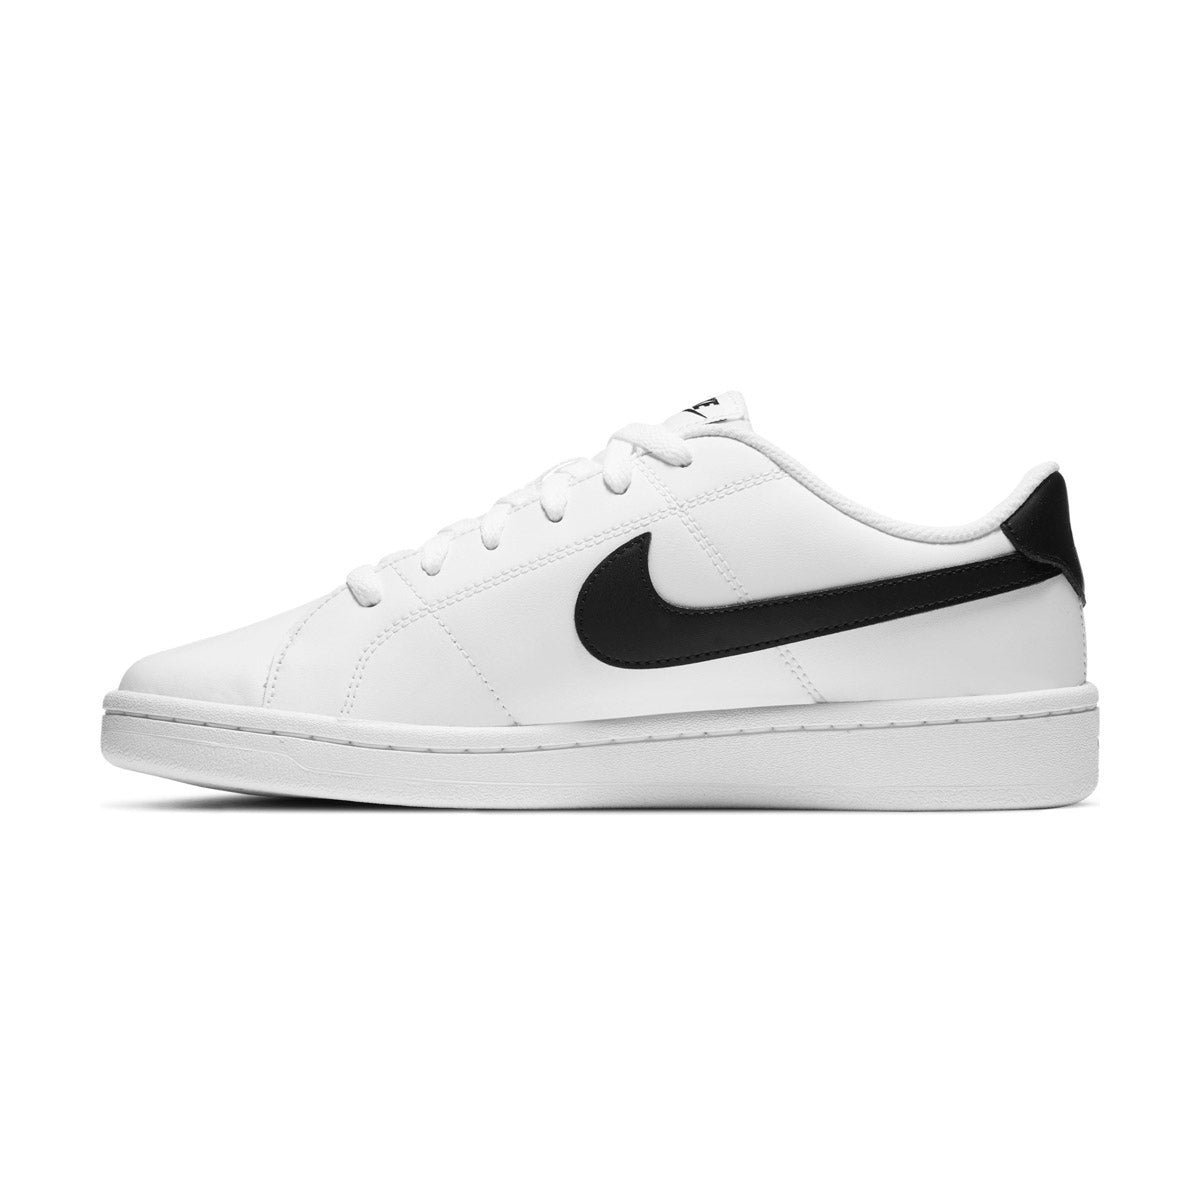 Nike Court Royale 2 Shoes